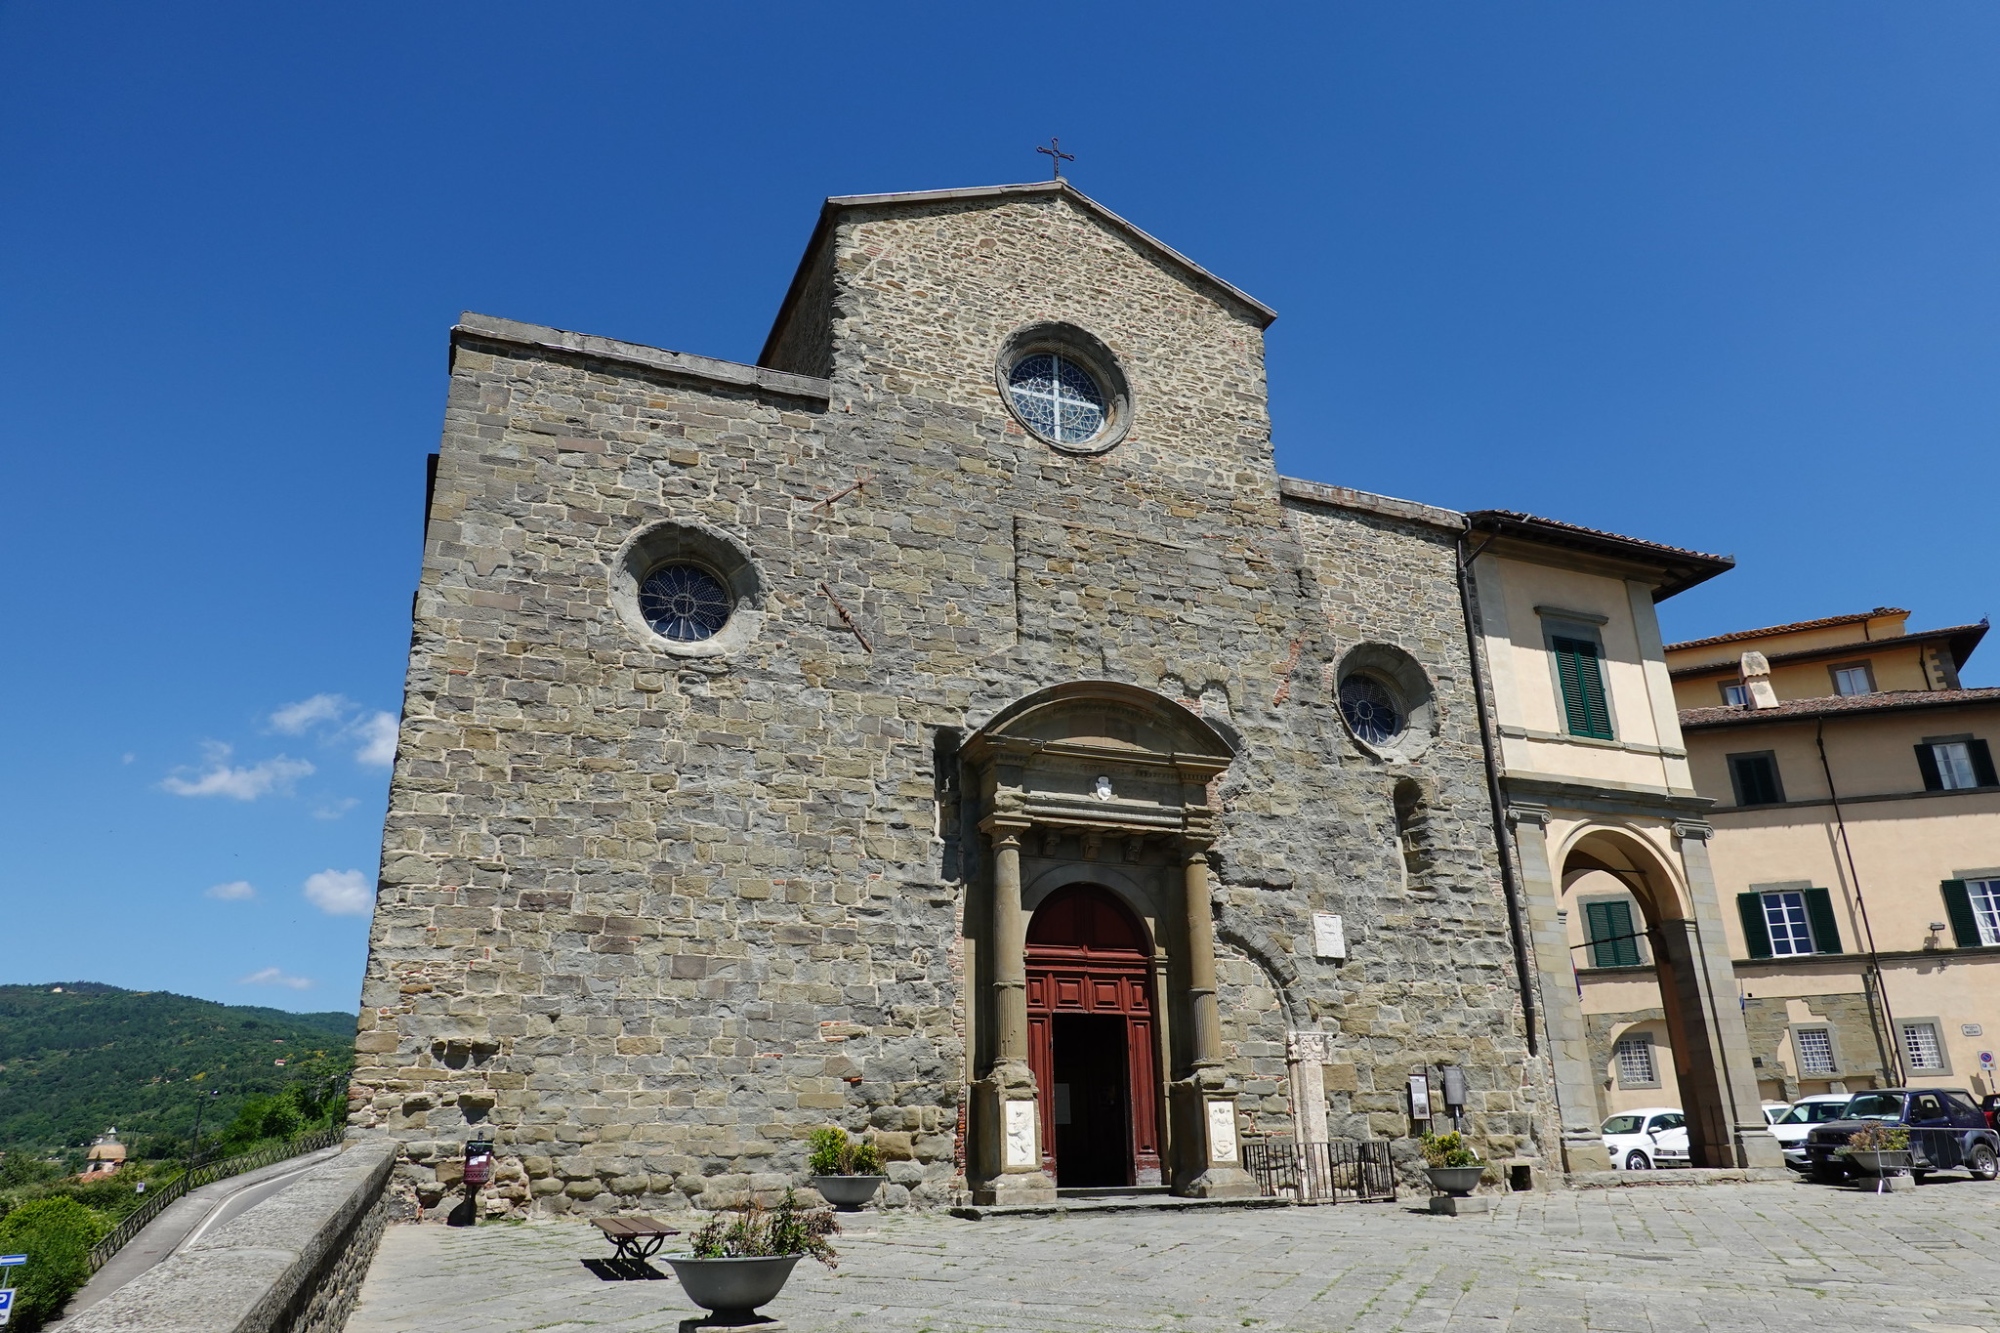 Cathedral of Cortona